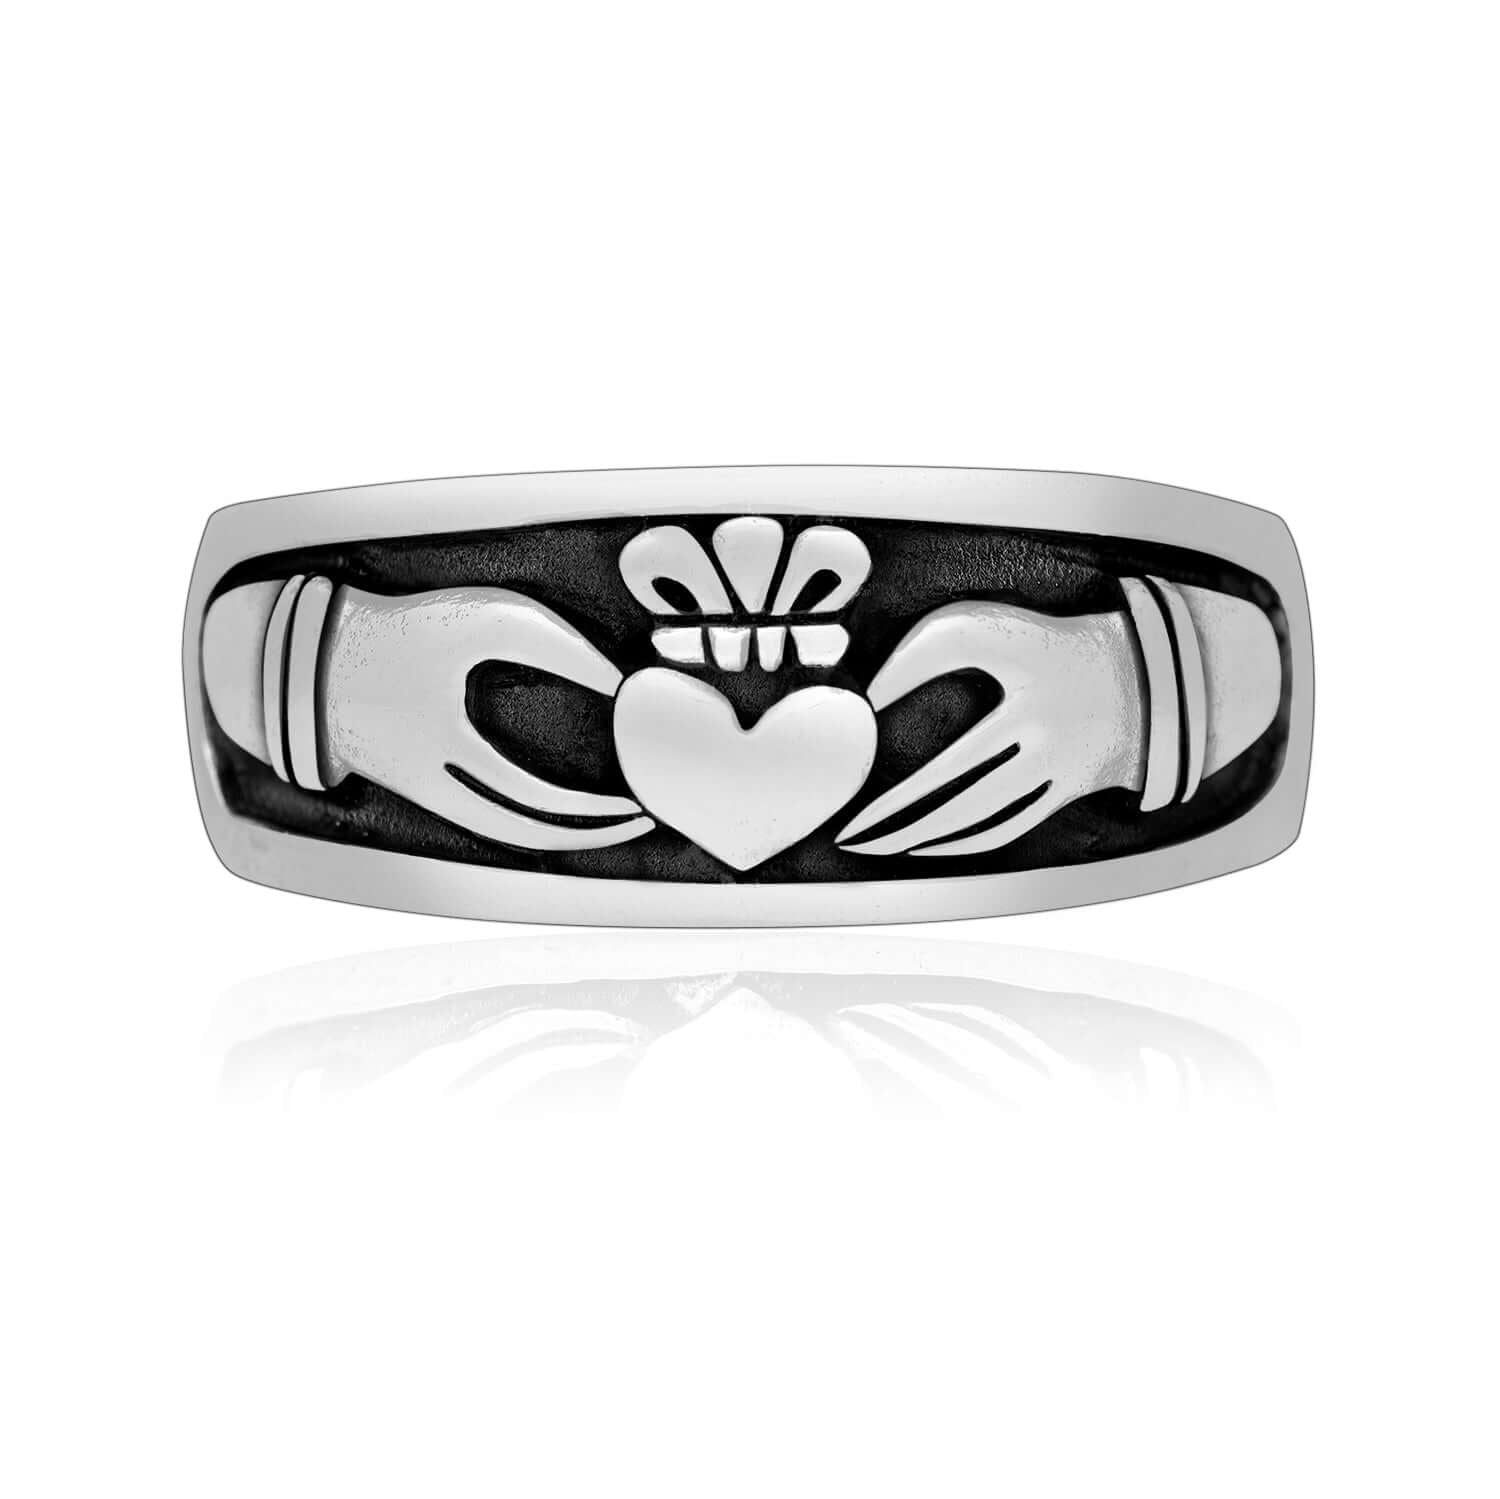 925 Sterling Silver Celtic Irish Claddagh Wedding Ring